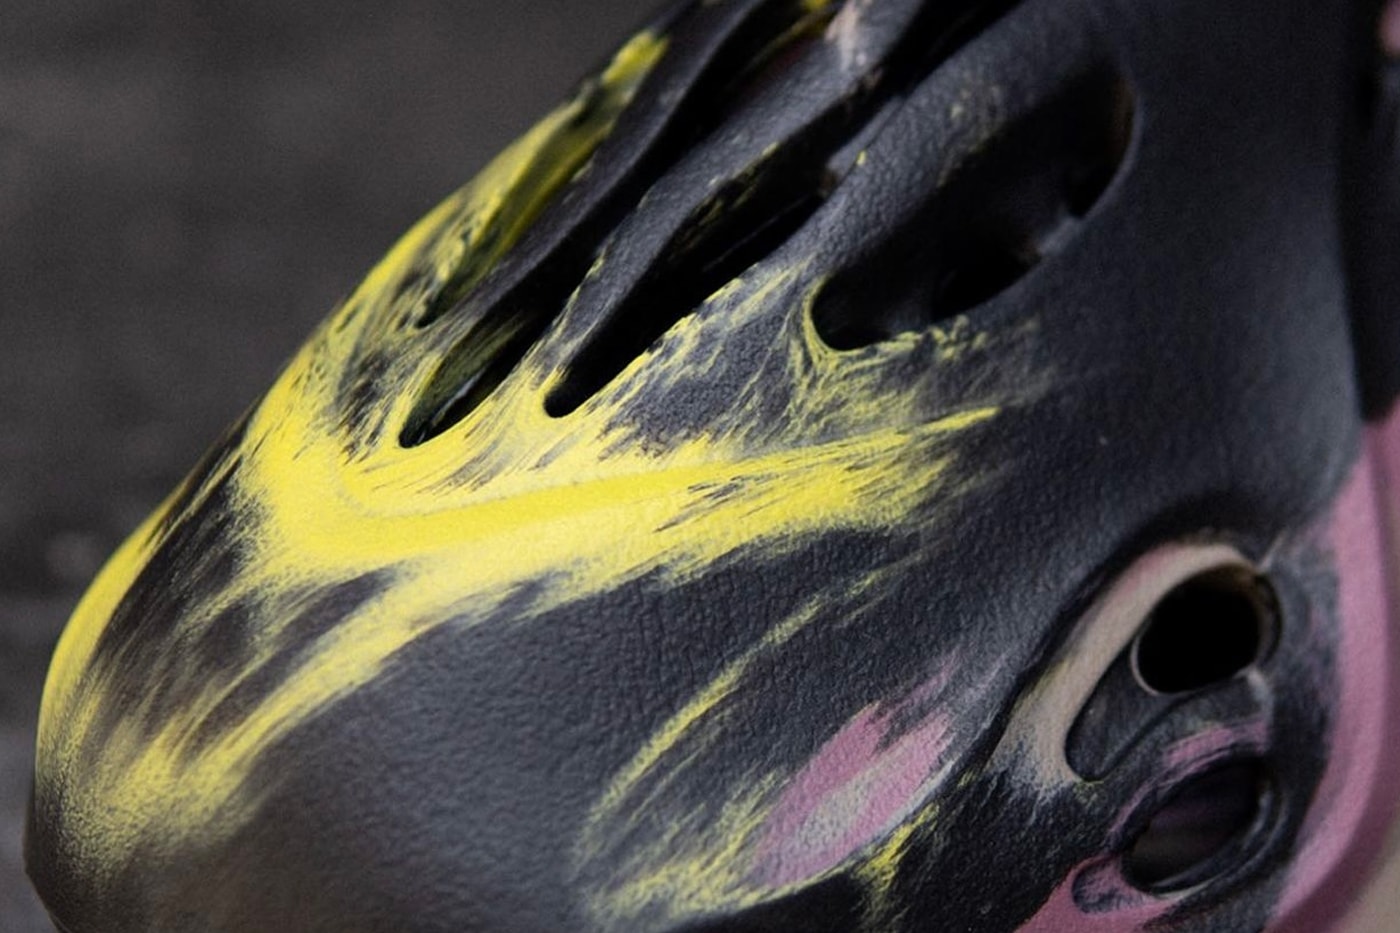 adidas YEEZY Foam Runner MX Carbon Closer Look Release Info Date Buy Price Kanye West